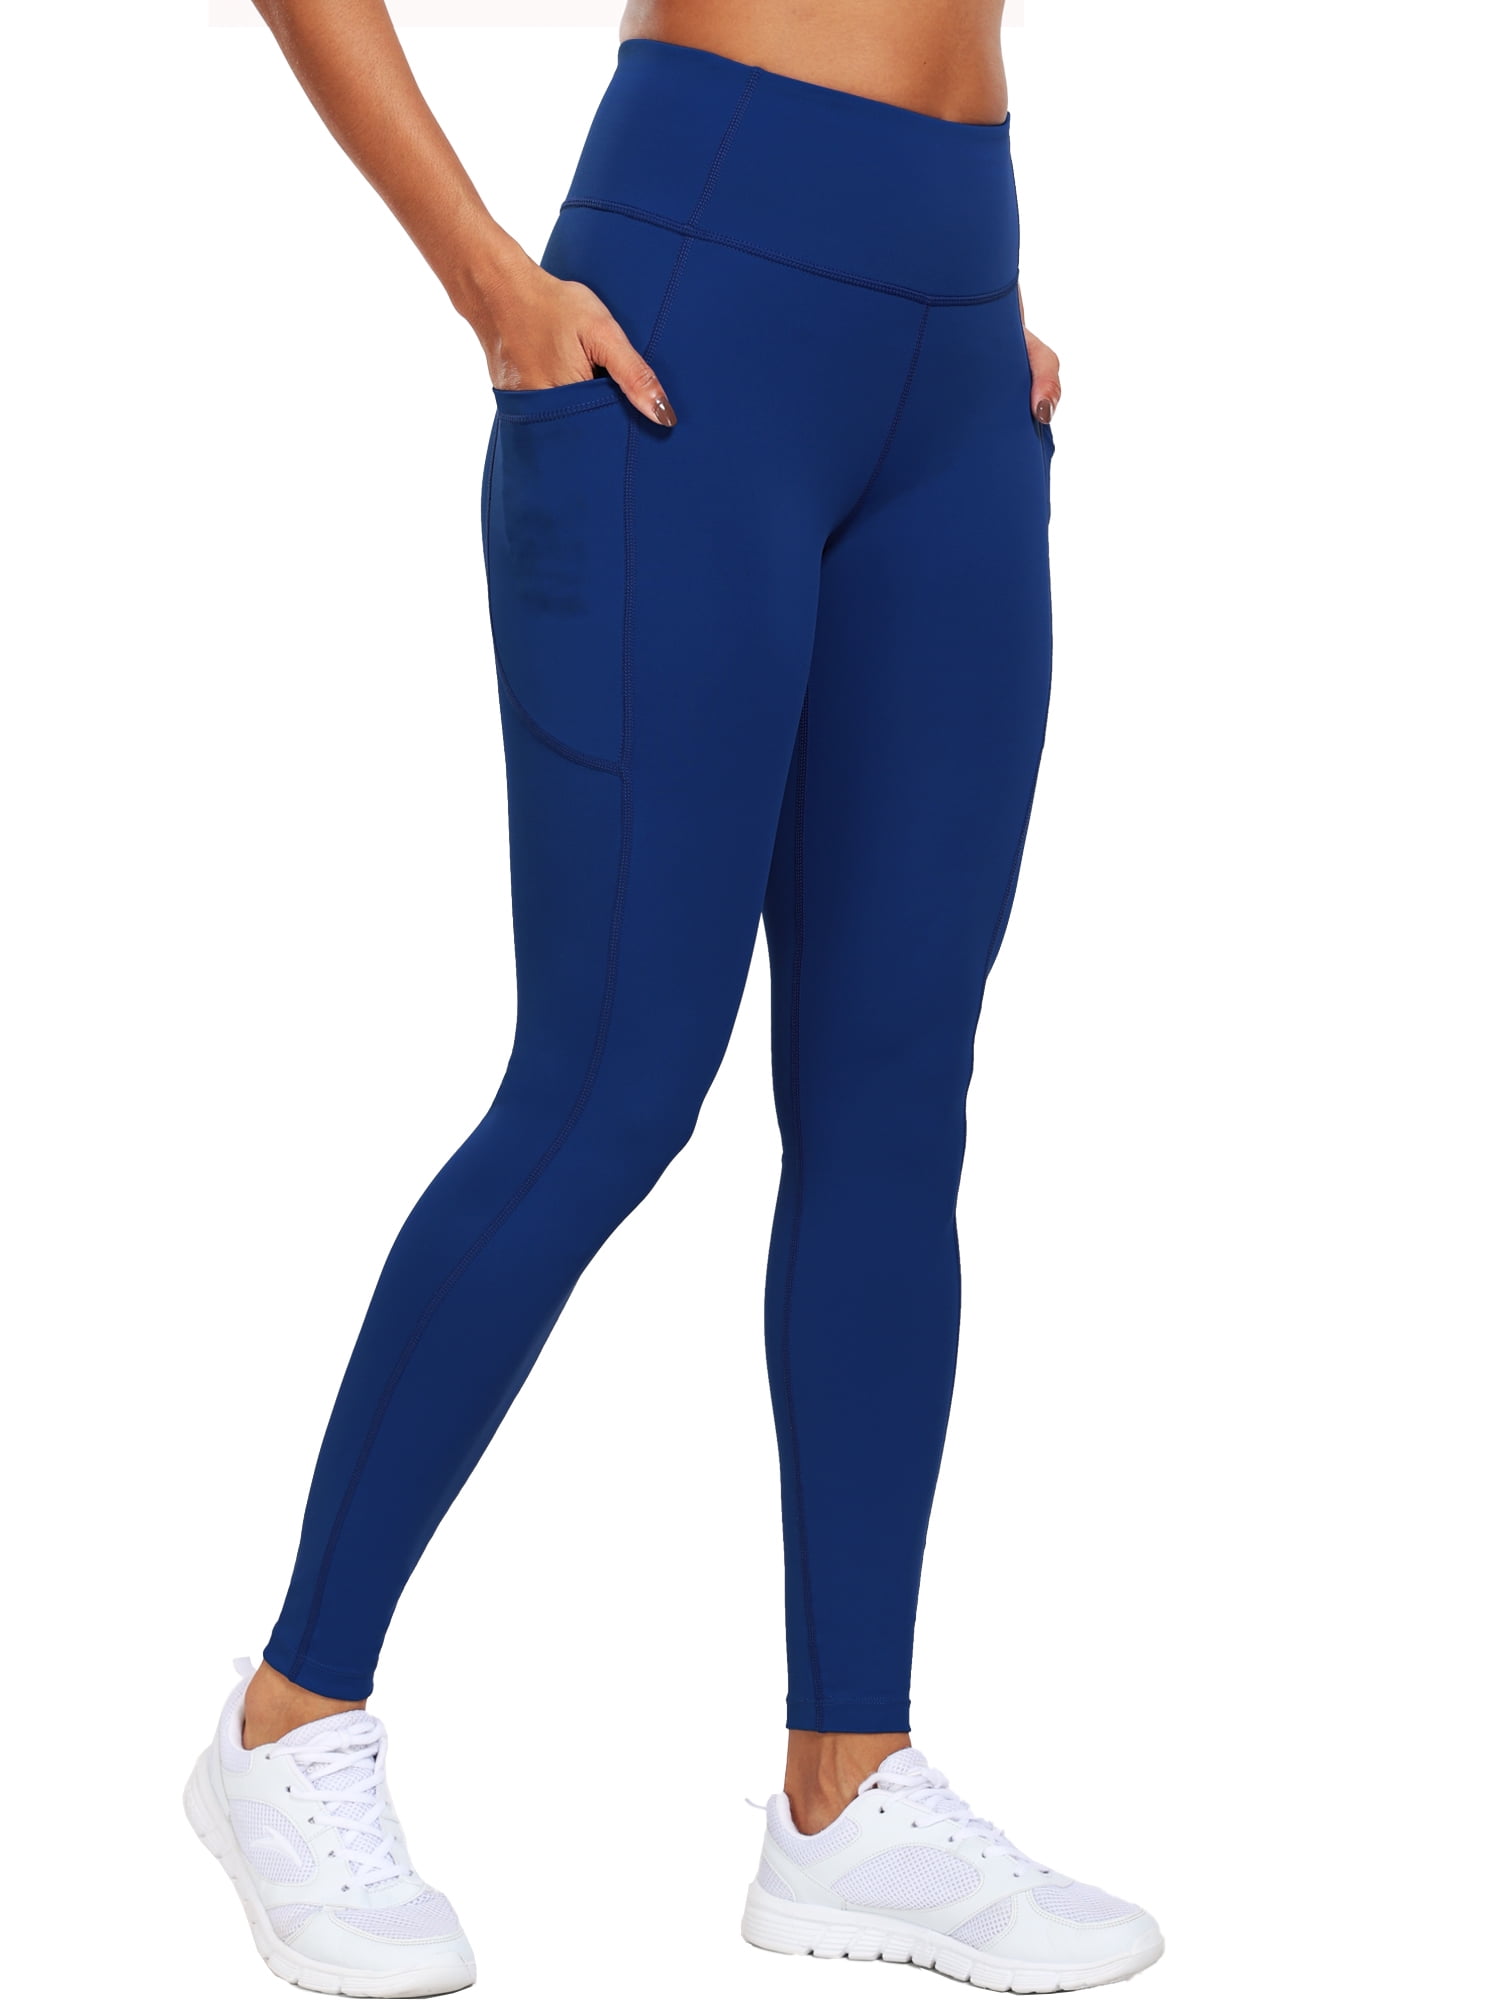 3 for $49! Navy Blue Cassi Side Pockets Workout Leggings Yoga Pants - Women